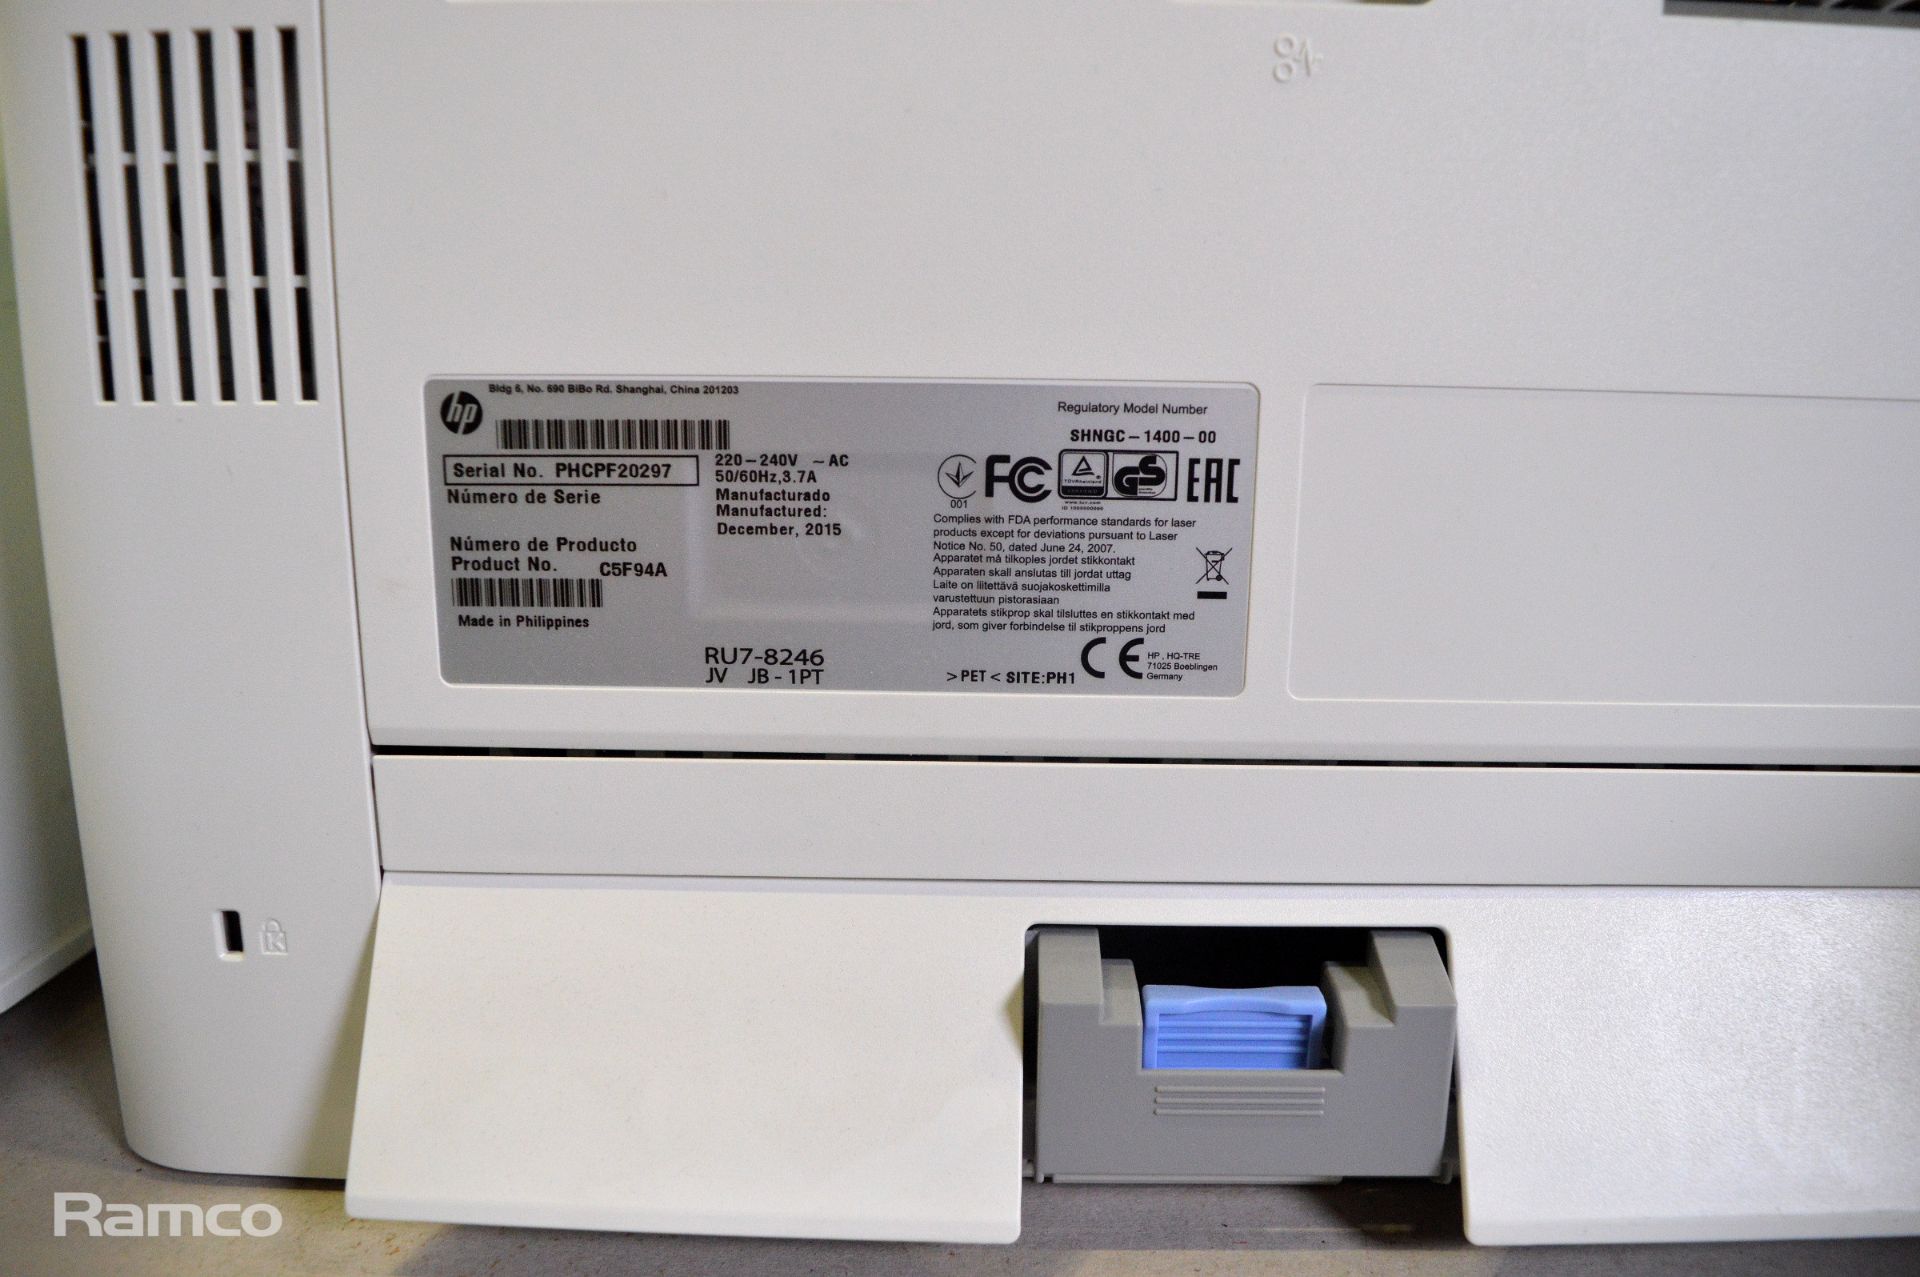 Brother HL-2240 printer, Brother LaserJet Pro printer M401dne, 3x HP laserjet pro M402dn p - Image 4 of 9